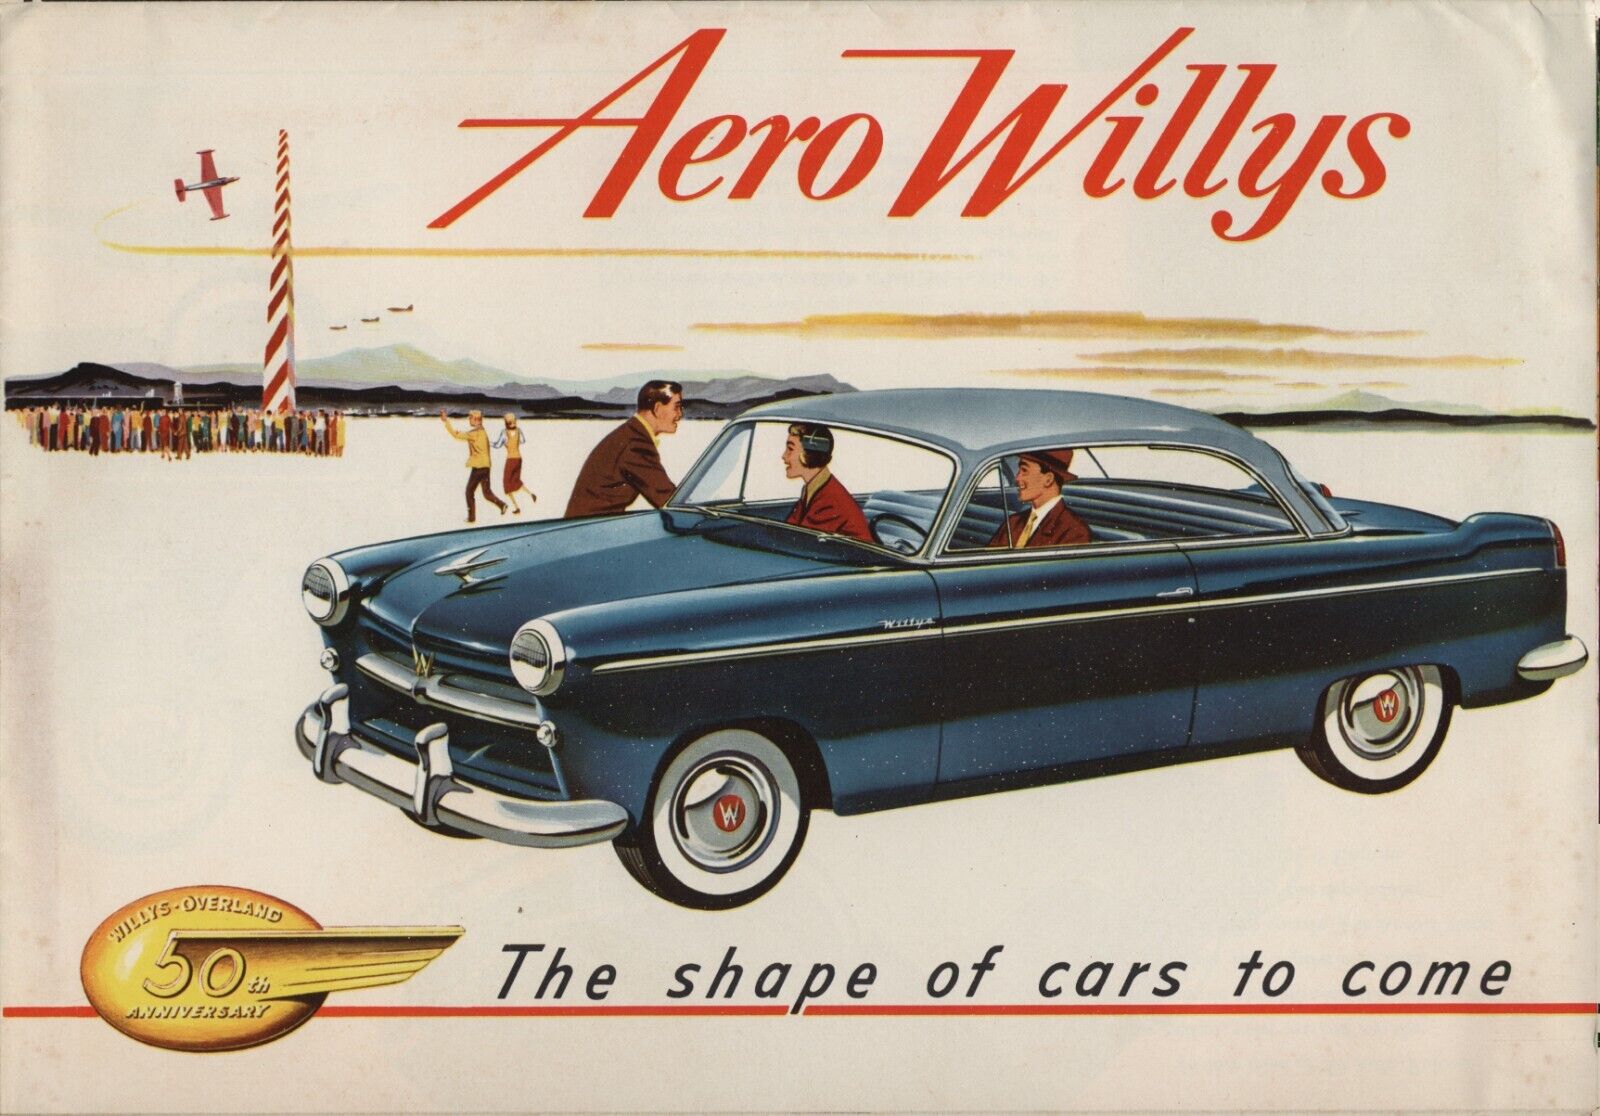 1953 Willys Automobile Toledo Ohio Dealer Literature Poster Like Aero Willys